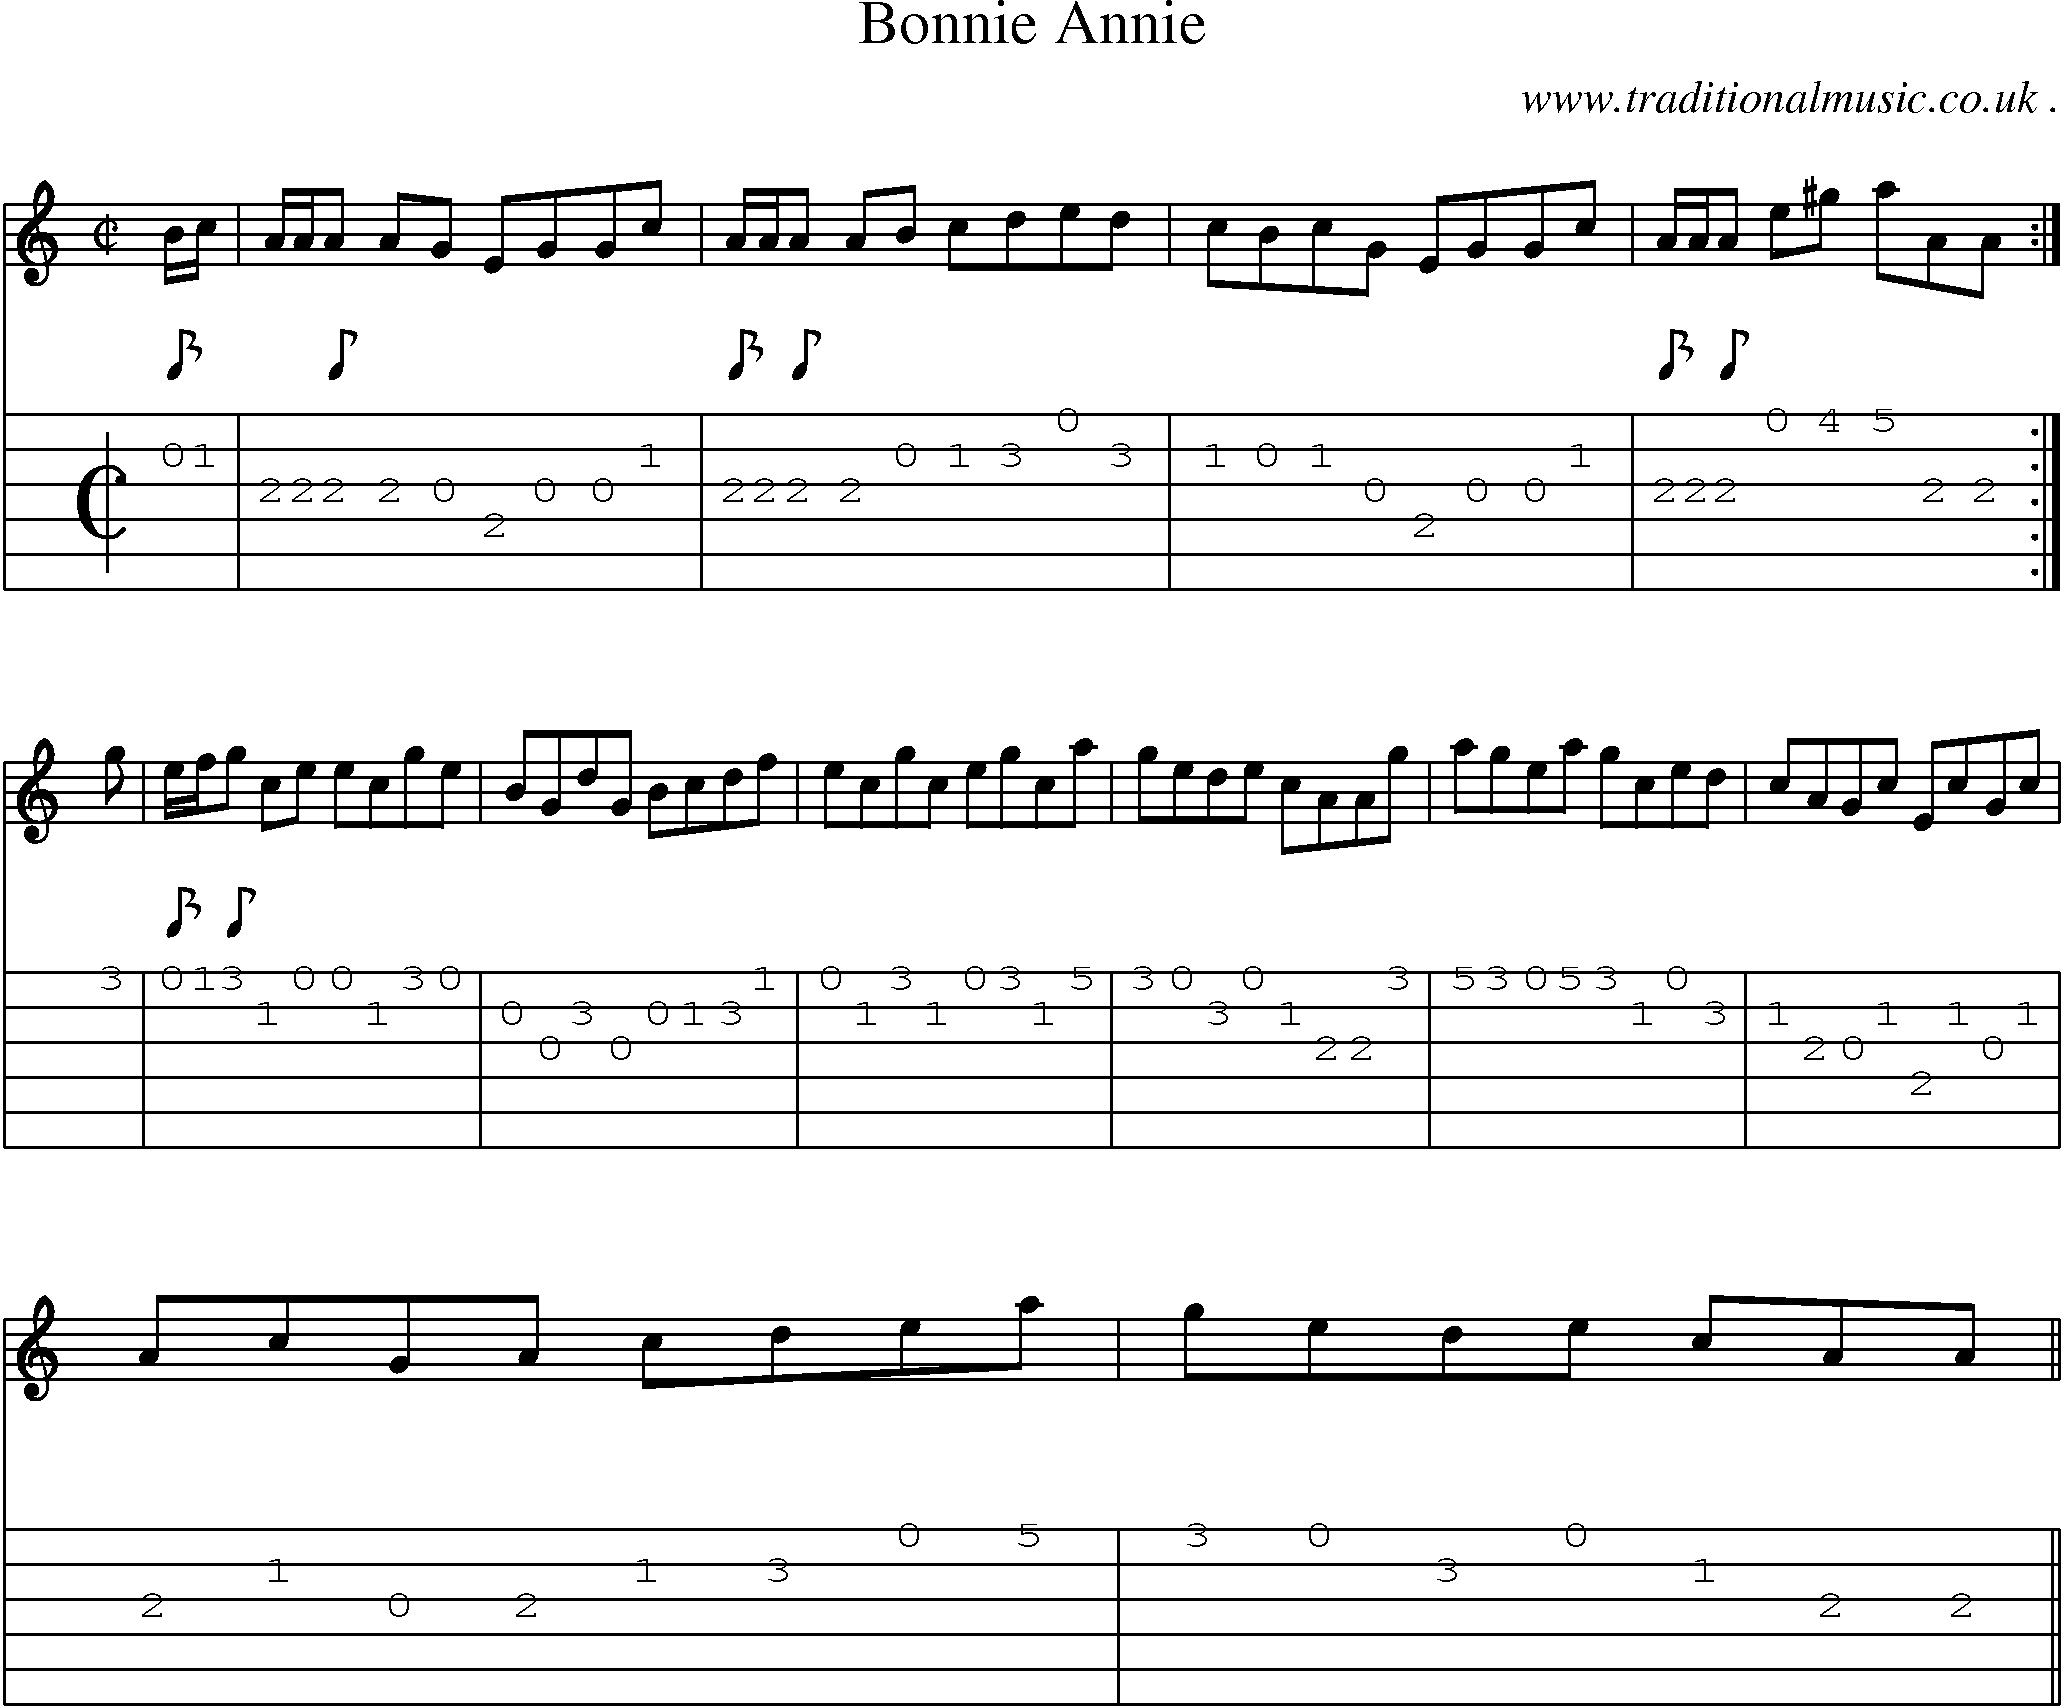 Sheet-music  score, Chords and Guitar Tabs for Bonnie Annie